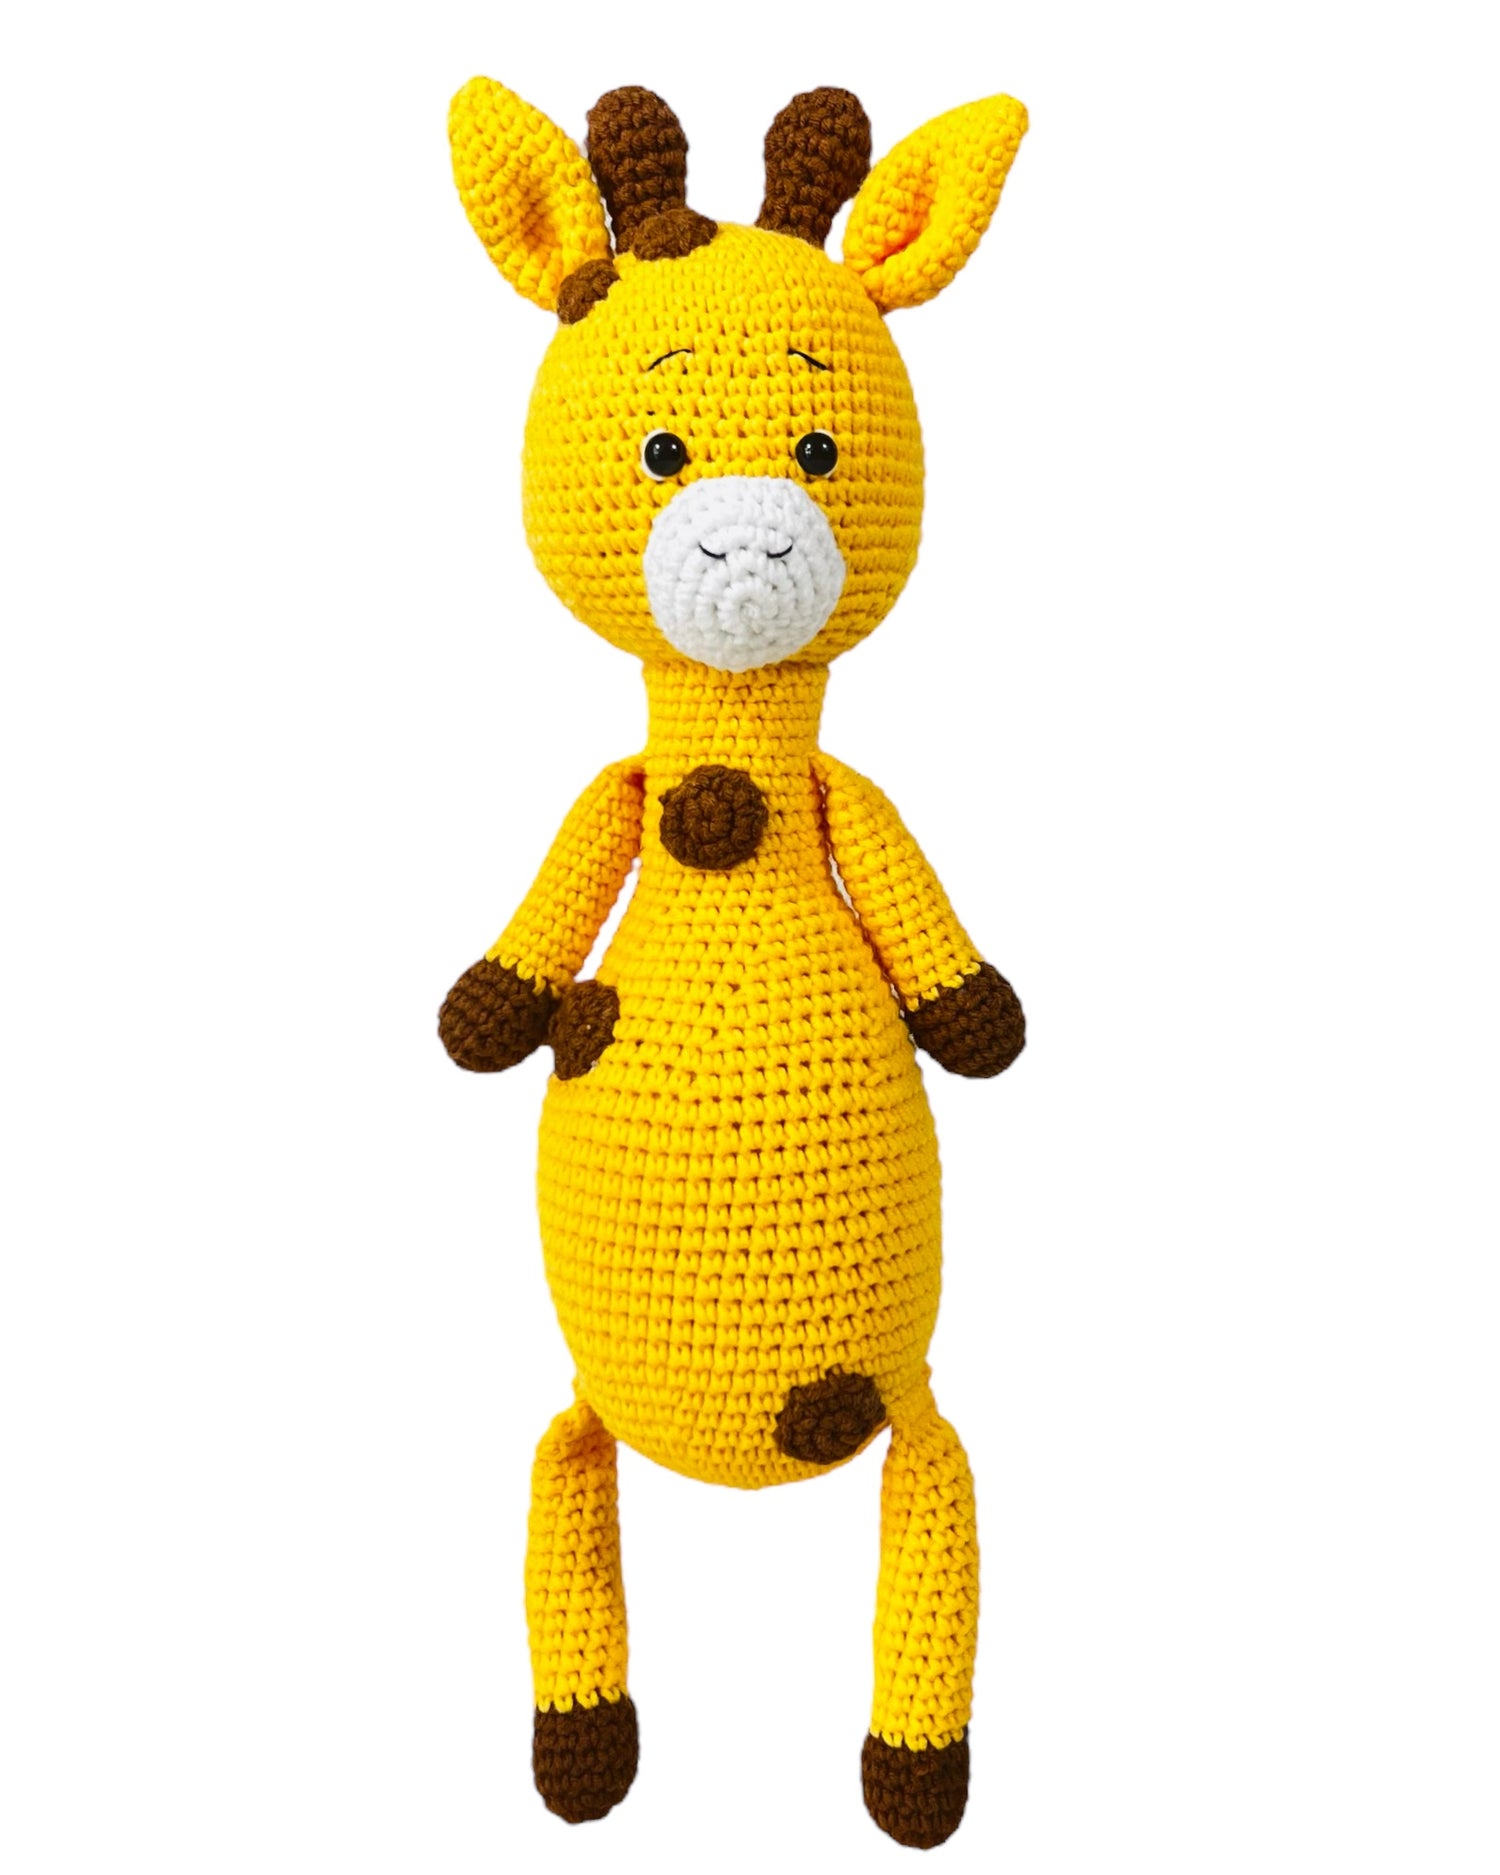 Crocheted Animal Doll - Gino, the Giraffe